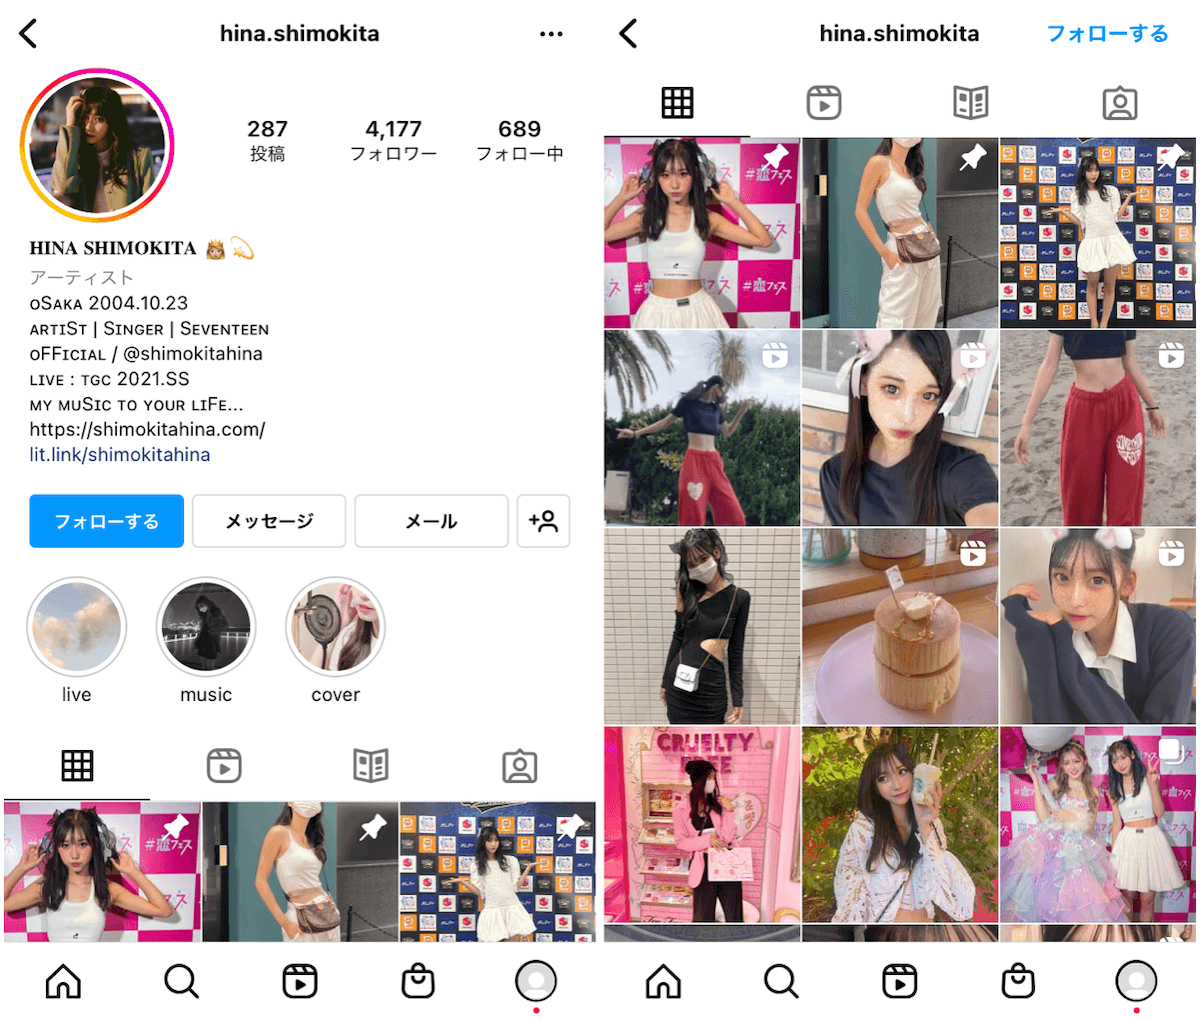 Instagram-high-school-cosmetic-hina.shimokita